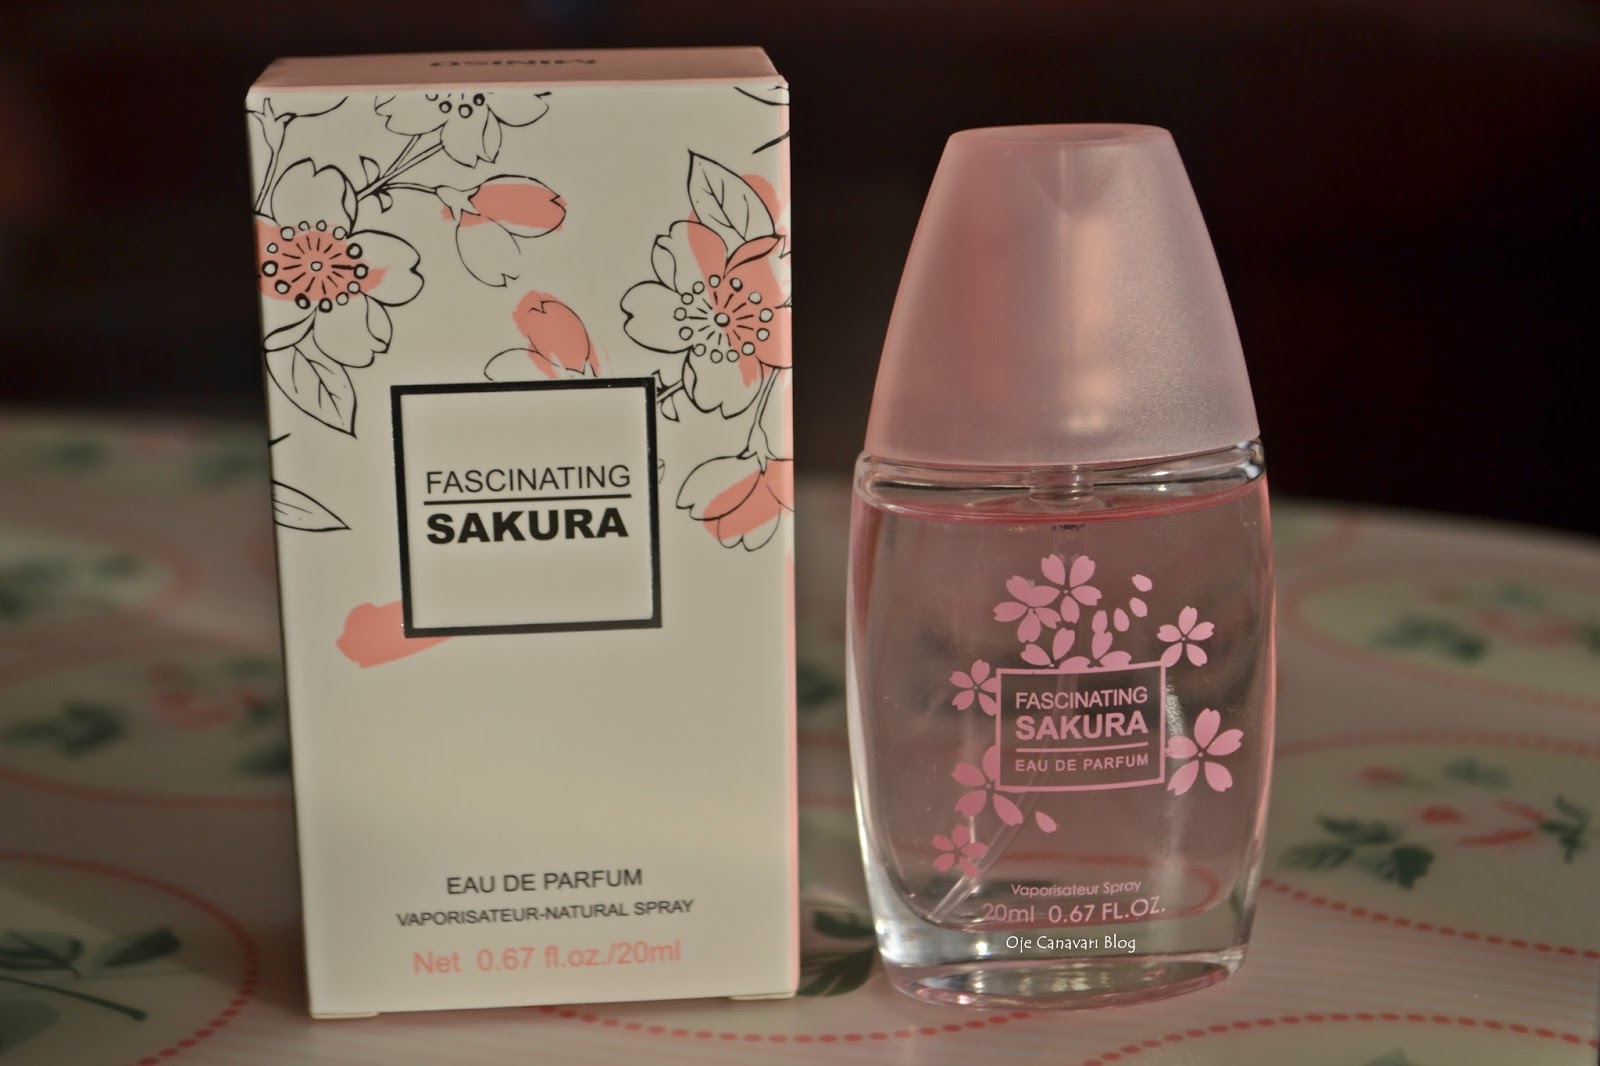 Духи cherry blossom. Парфюм Сакура. Туалетная вода Sakura. Cherry Blossom духи. Fascinating Sakura духи.